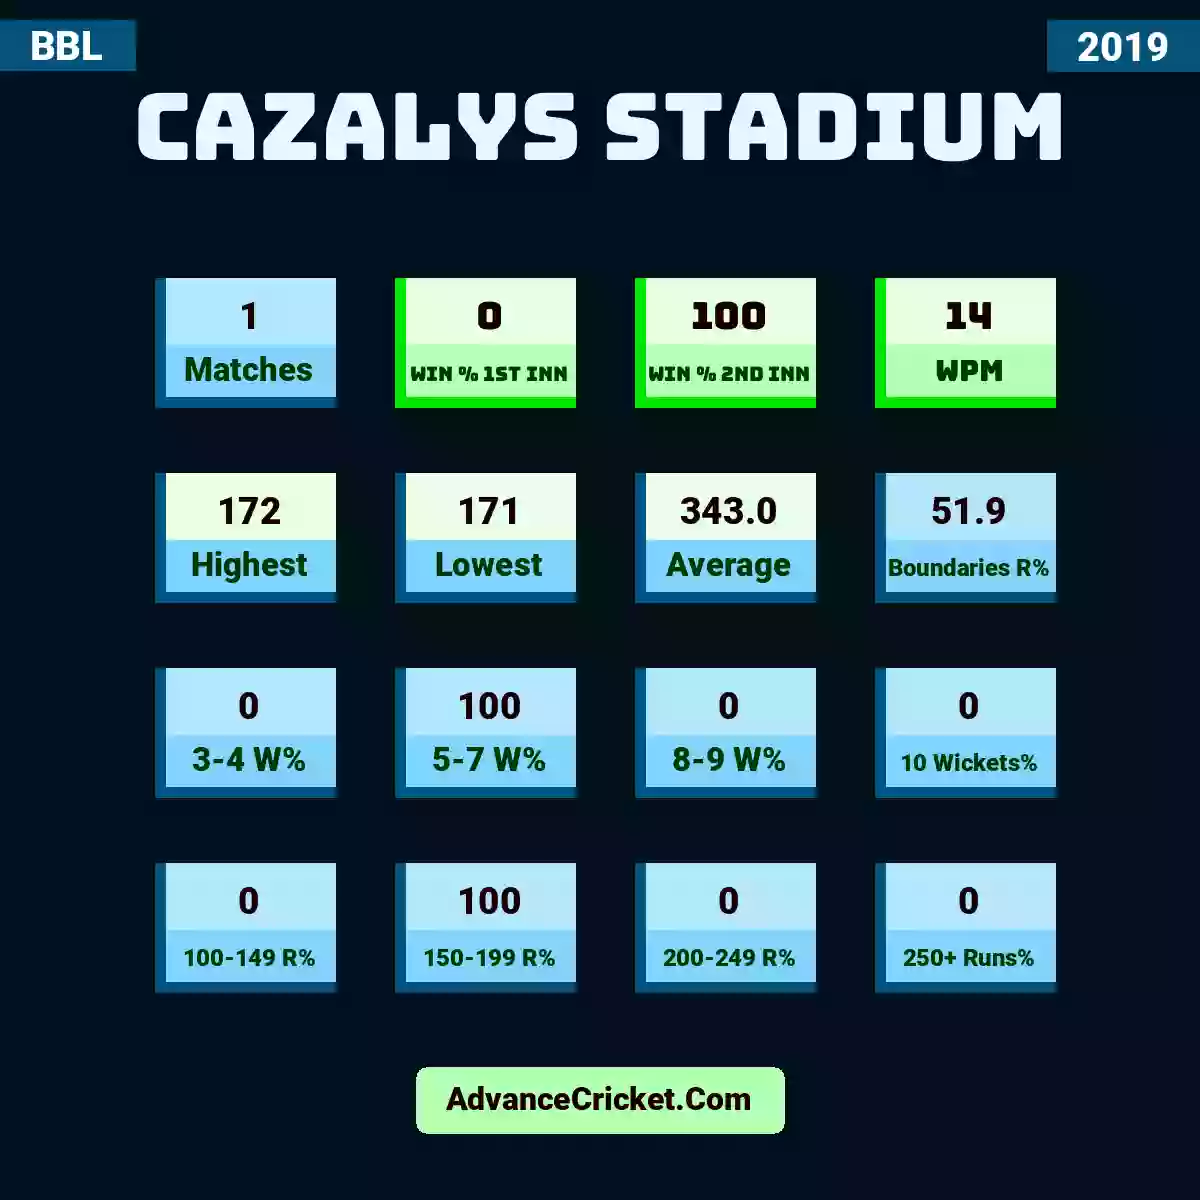 Image showing Cazalys Stadium with Matches: 1, Win % 1st Inn: 0, Win % 2nd Inn: 100, WPM: 14, Highest: 172, Lowest: 171, Average: 343.0, Boundaries R%: 51.9, 3-4 W%: 0, 5-7 W%: 100, 8-9 W%: 0, 10 Wickets%: 0, 100-149 R%: 0, 150-199 R%: 100, 200-249 R%: 0, 250+ Runs%: 0.